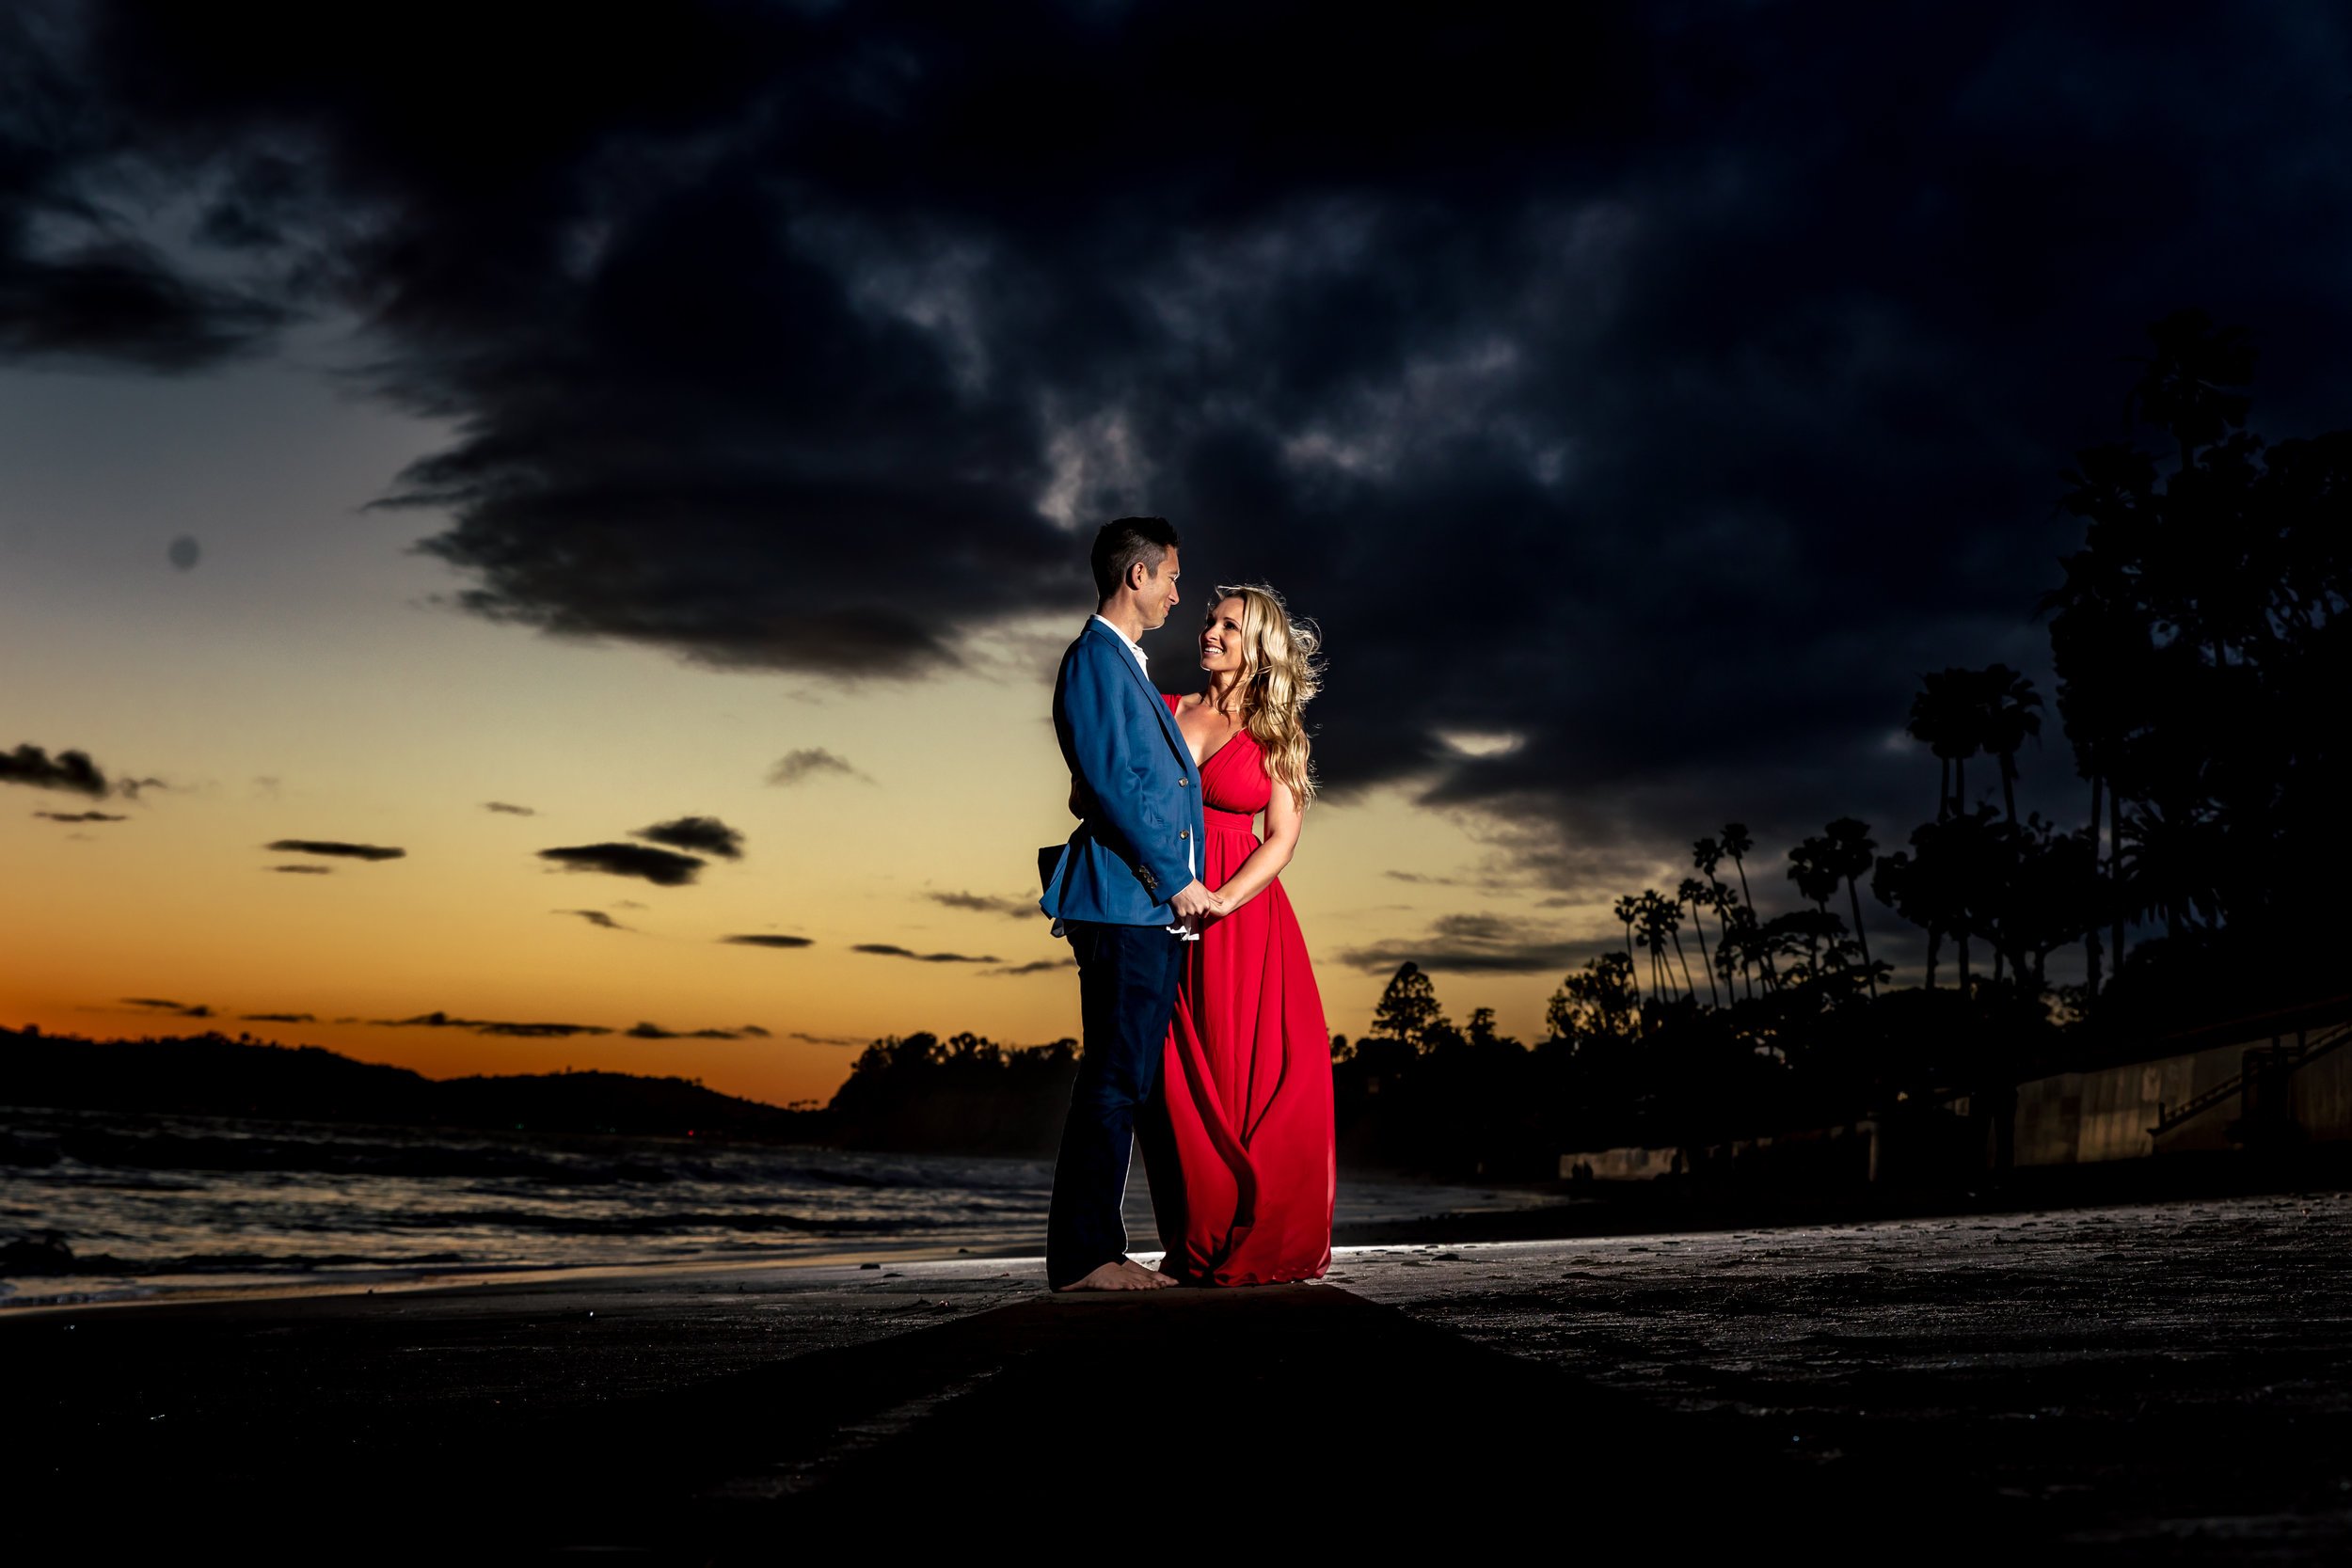 santabarbarawedding.com | Rewind Photography | Butterfly Beach | Engaged Couple on Beach at Dusk